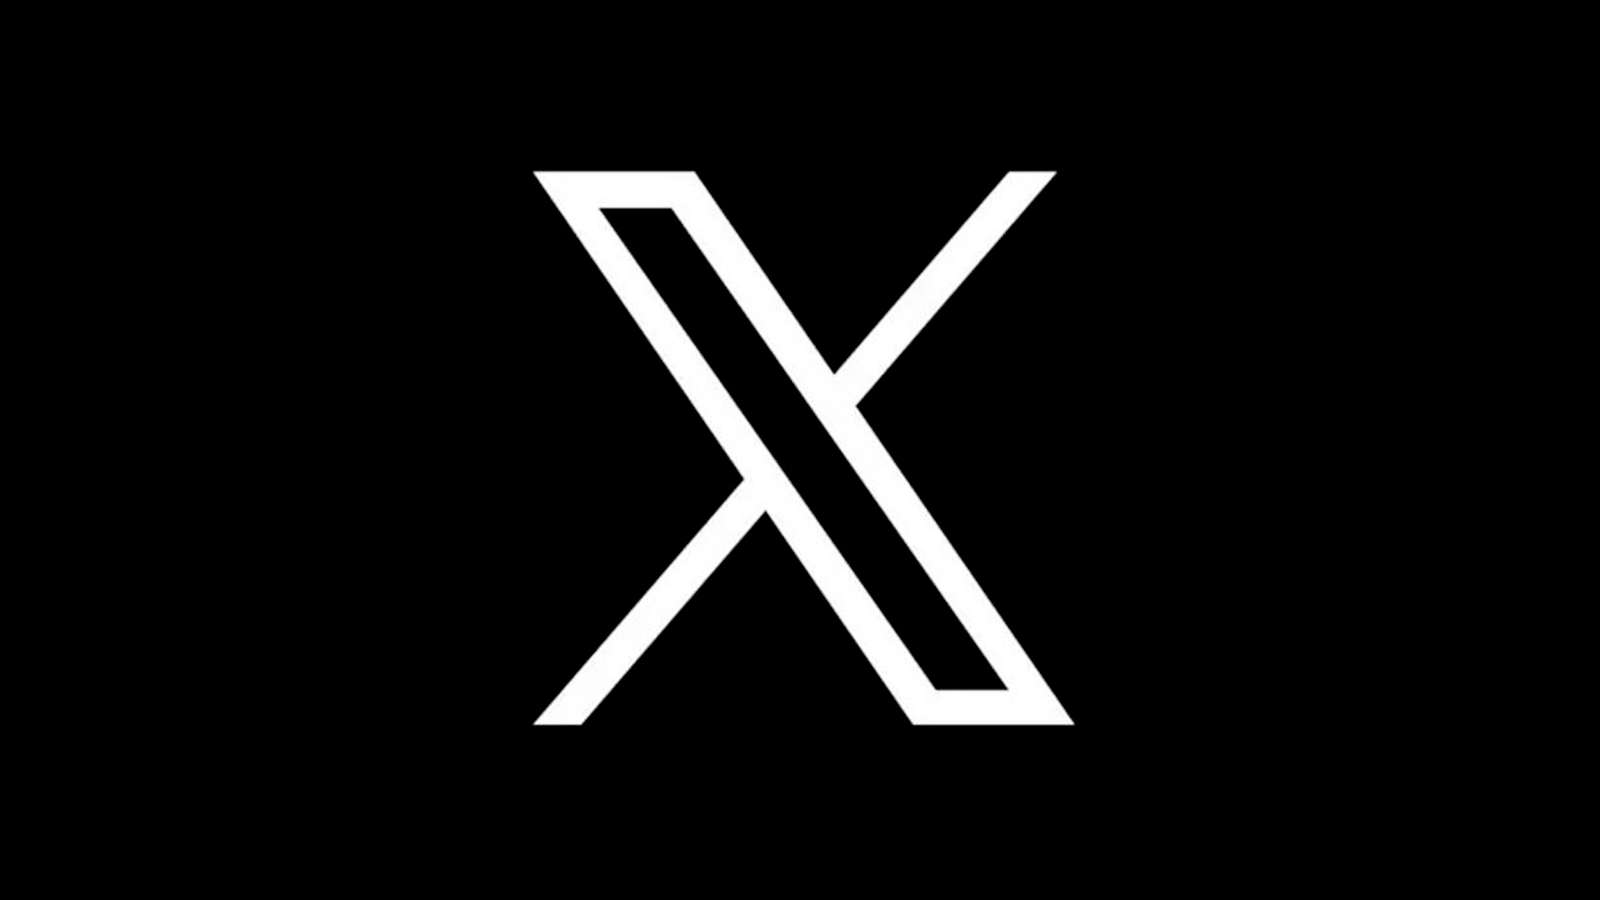 Compania X logo puzzle online din fotografie